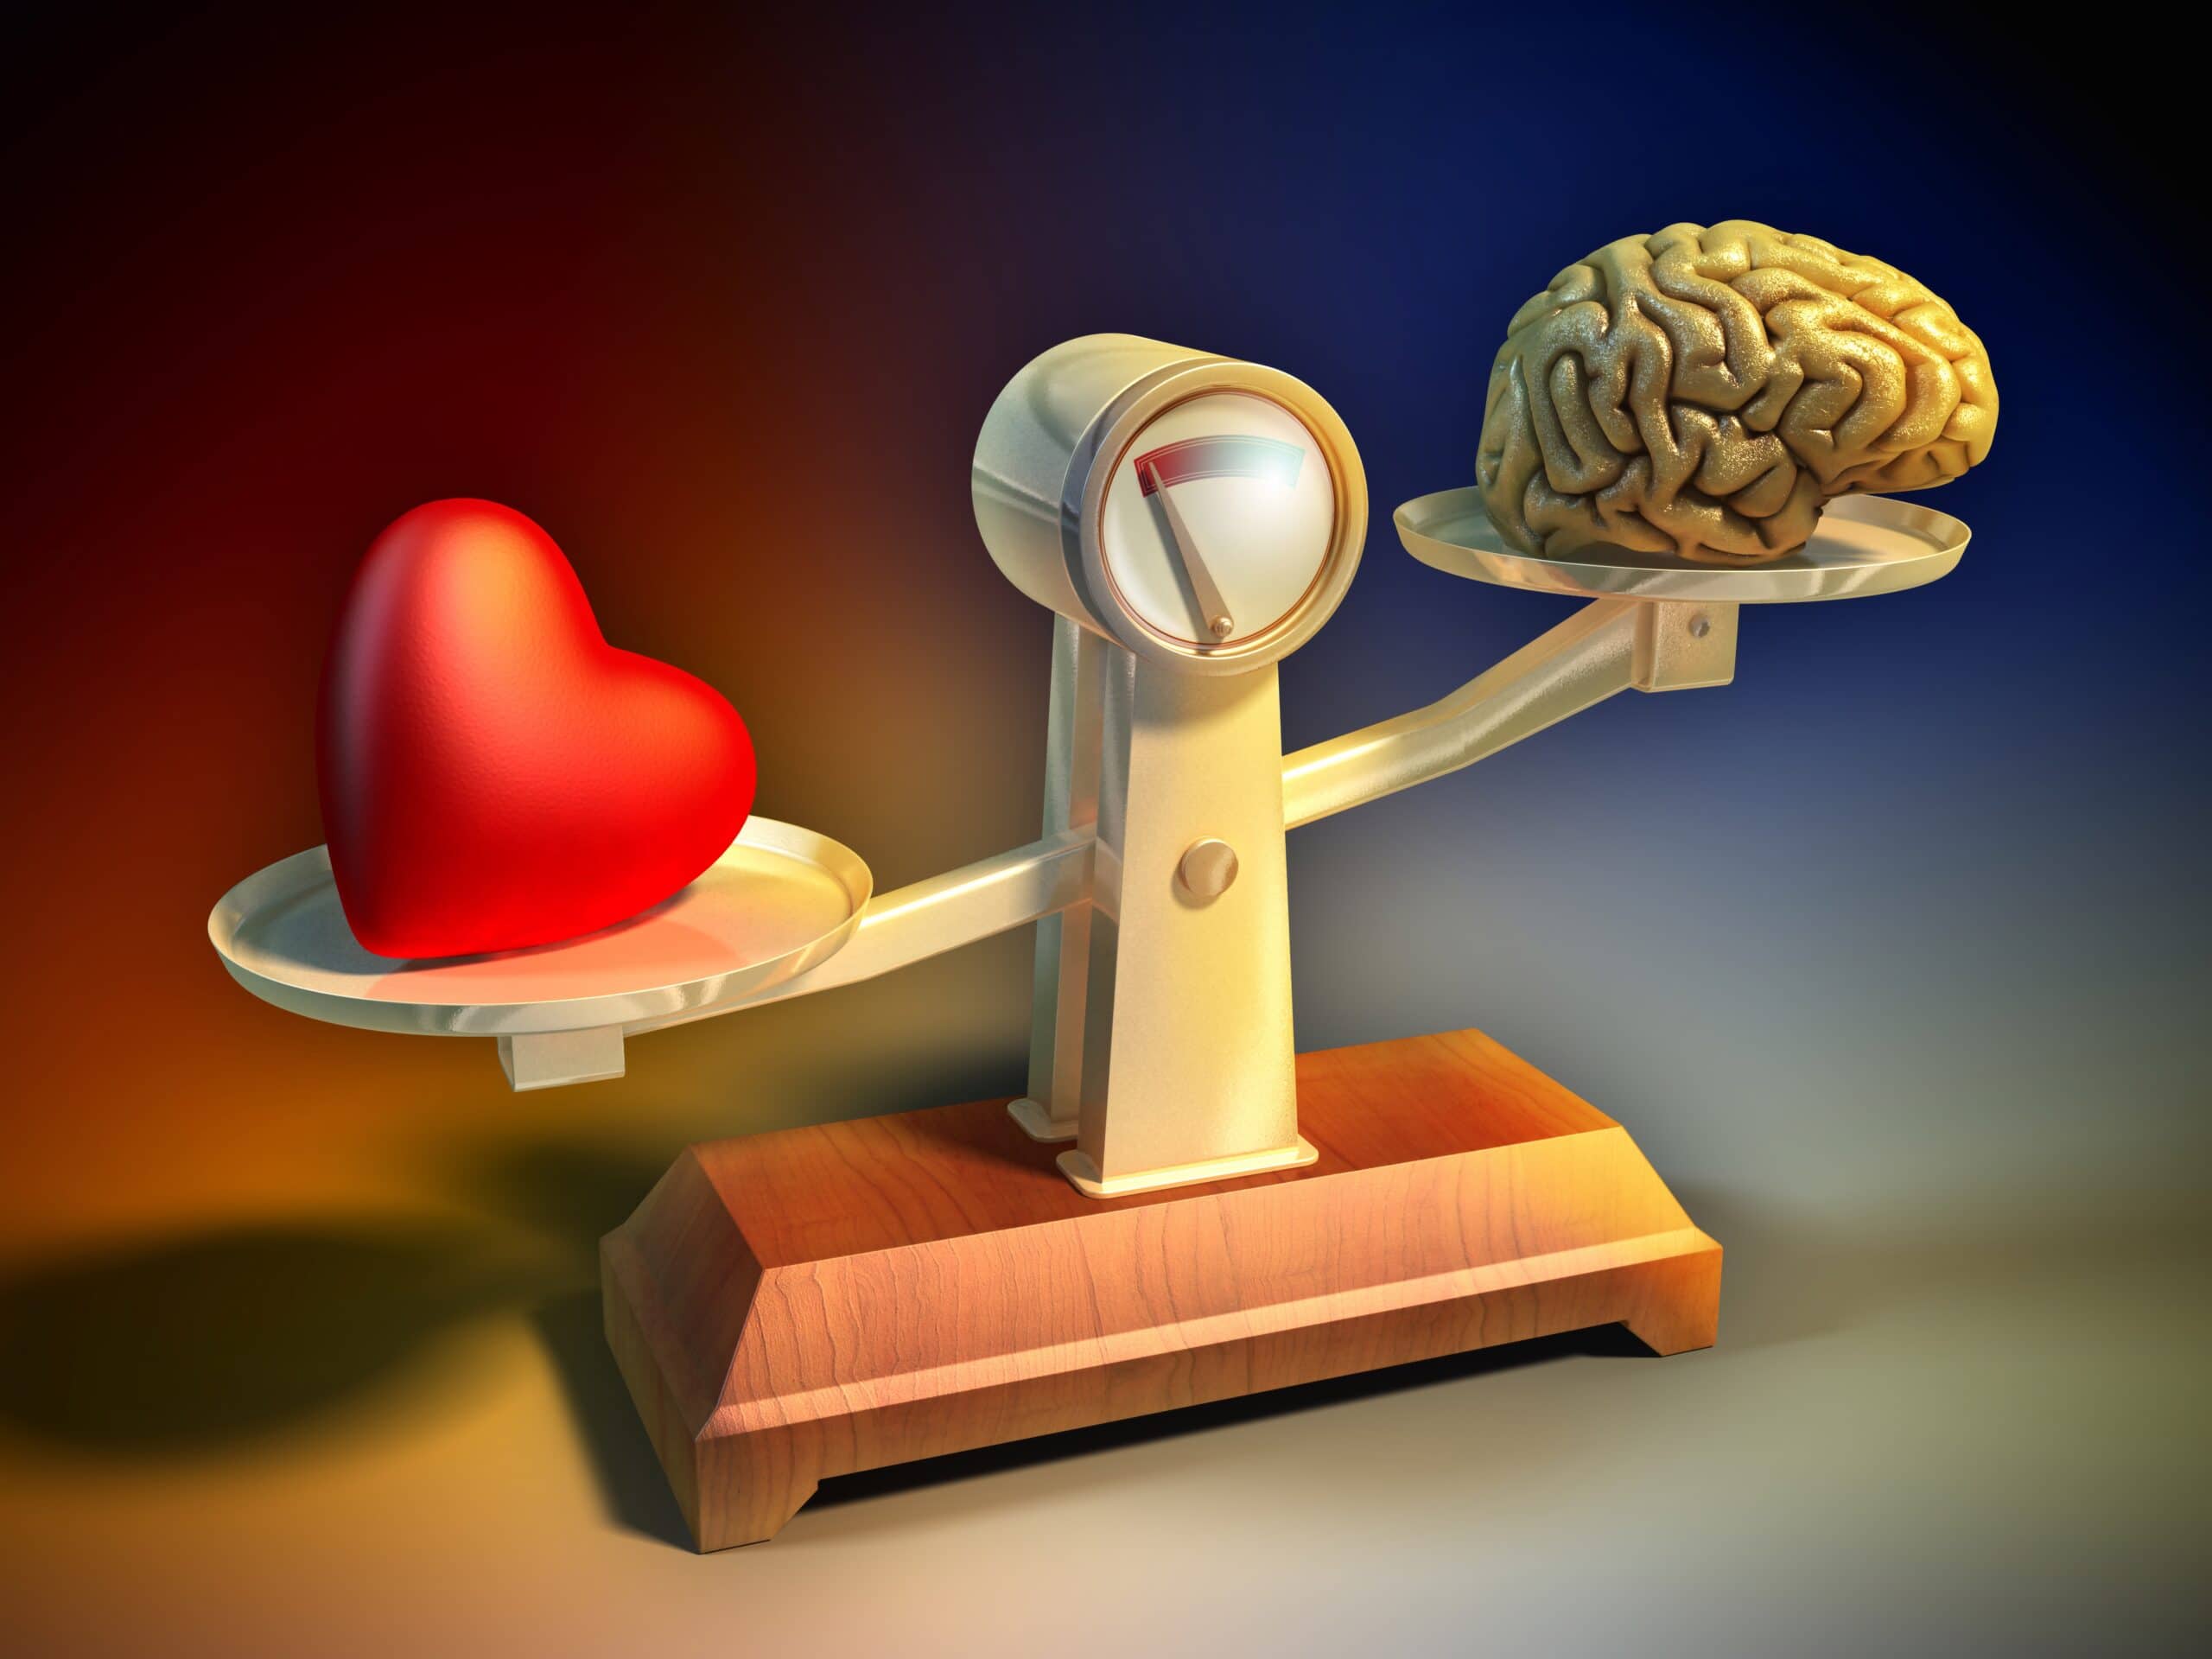 Heart and brain. Мозг и сердце. Сердце и разум. Ум и сердце. Сердце или разум.